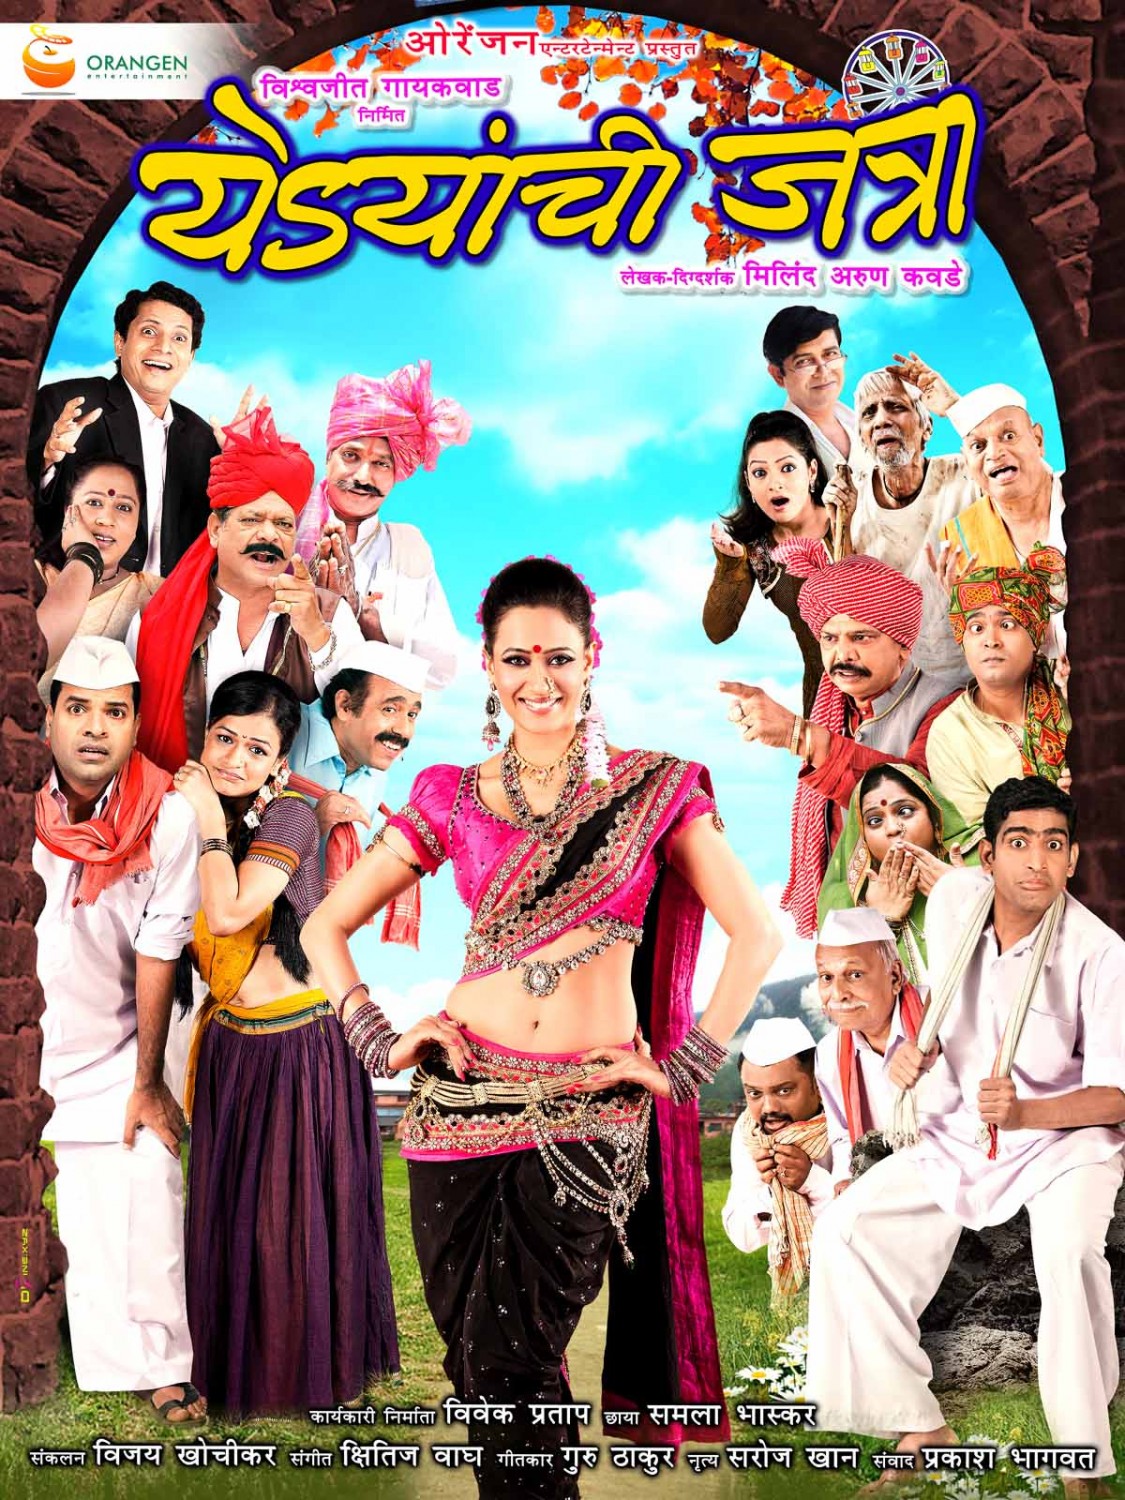 Extra Large Movie Poster Image for Yedyanchi Jatraa (#4 of 7)